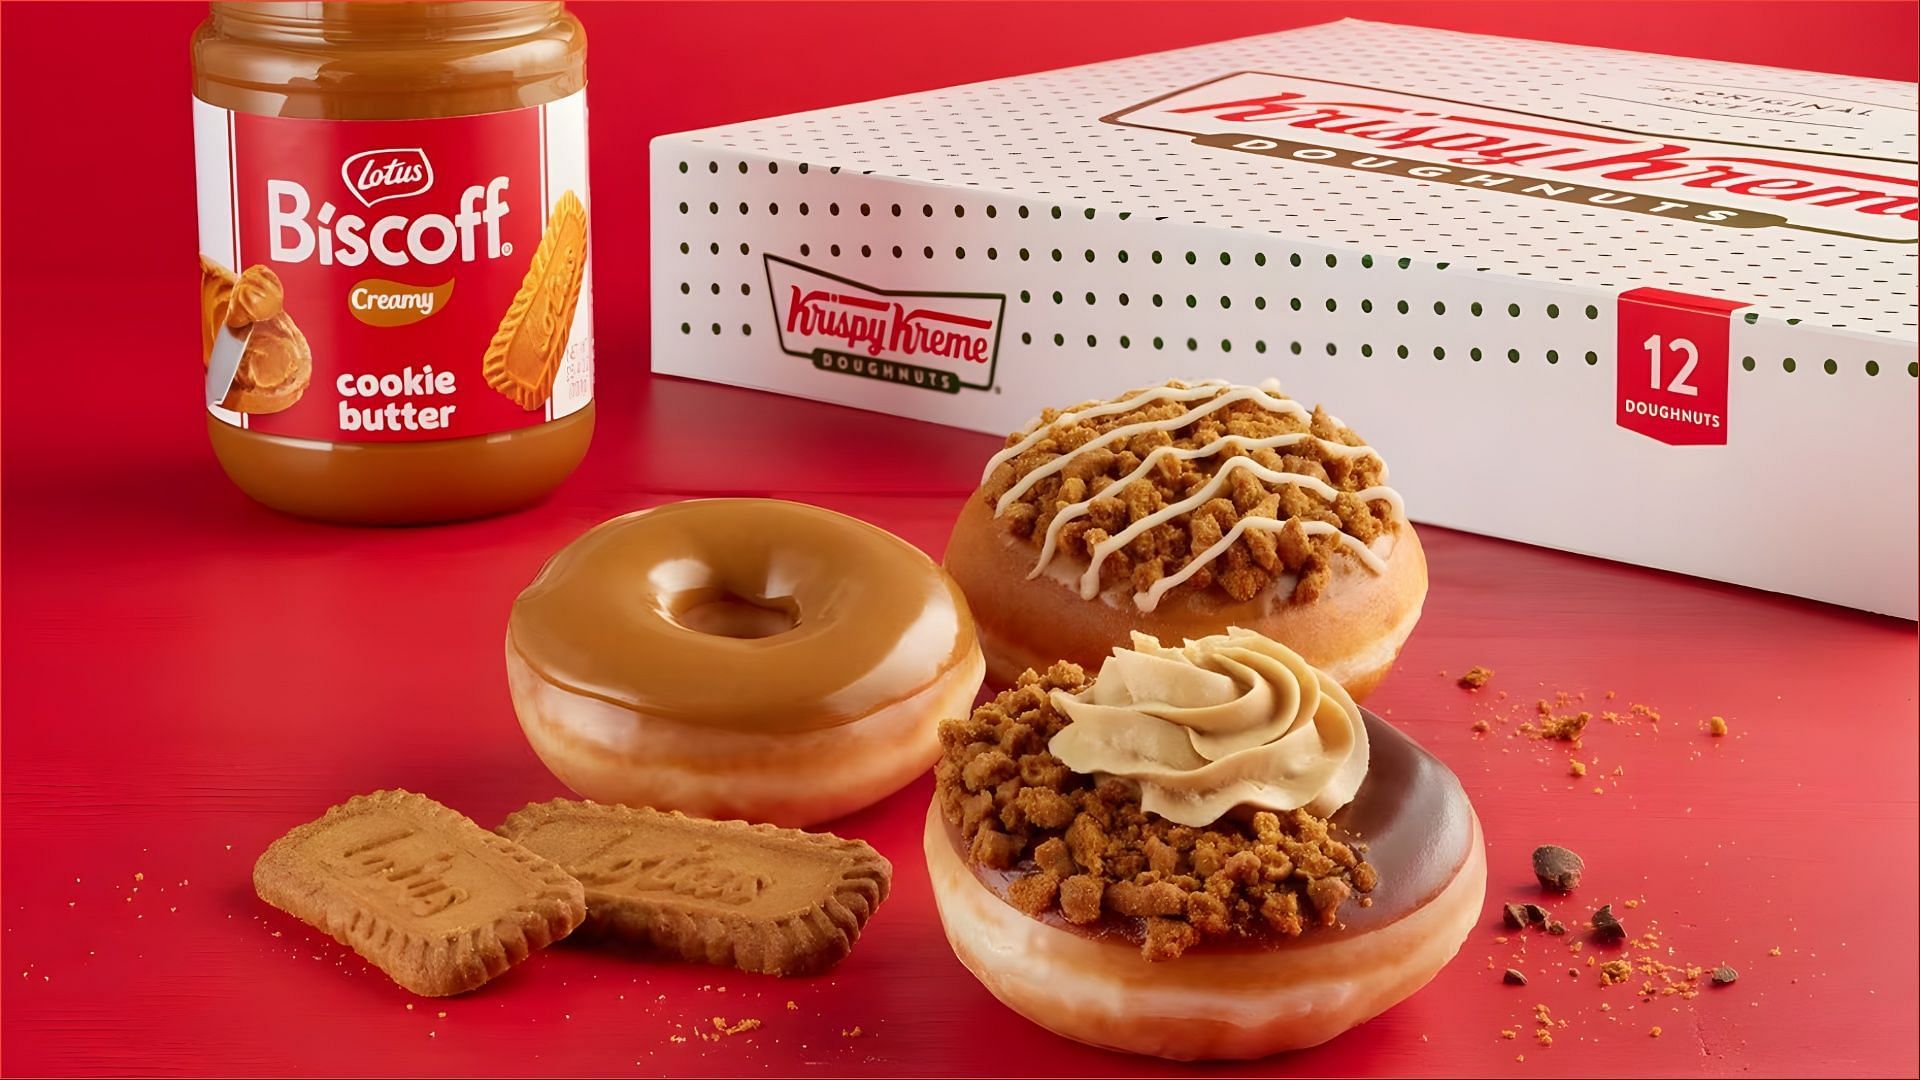 Krispy Kreme introduces new Biscoff Cookie doughnuts (Image via Krispy Kreme)